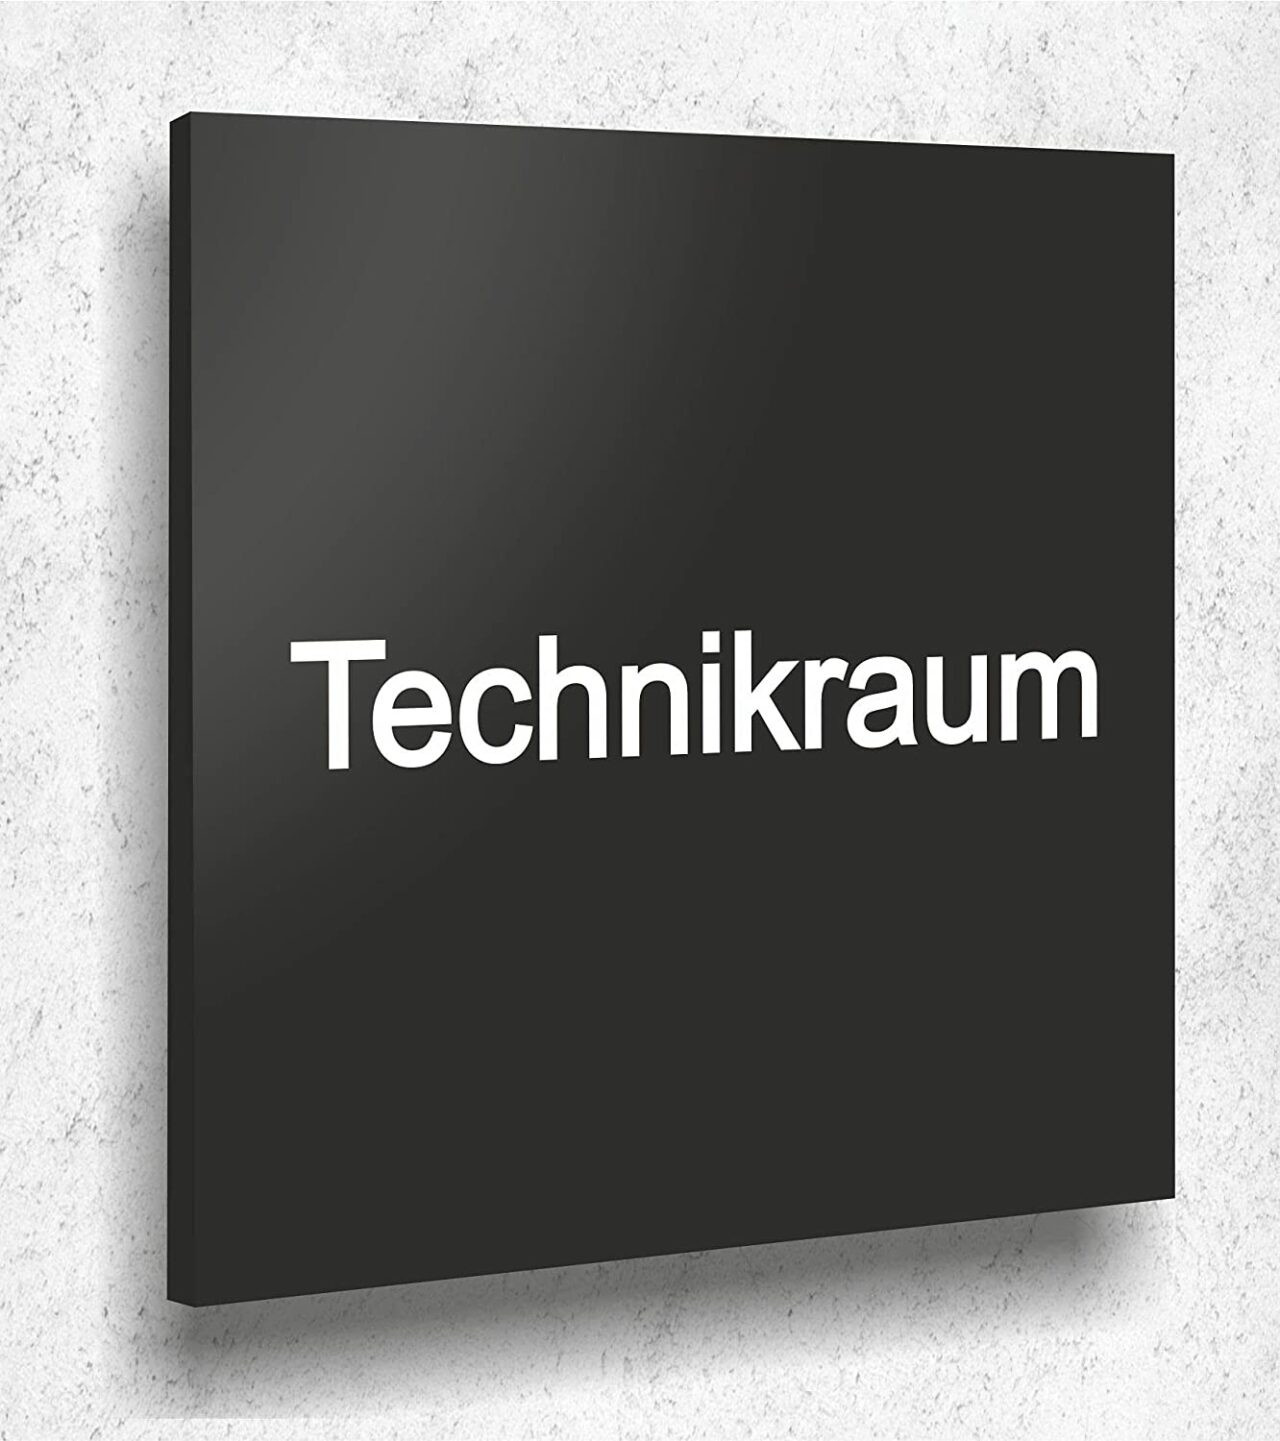 Türschild Technikraum Schild Schwarz Matt UV Druck 12 x 12cm - 3mm Acrylglas - Made in Germany Art.Nr. A 2006